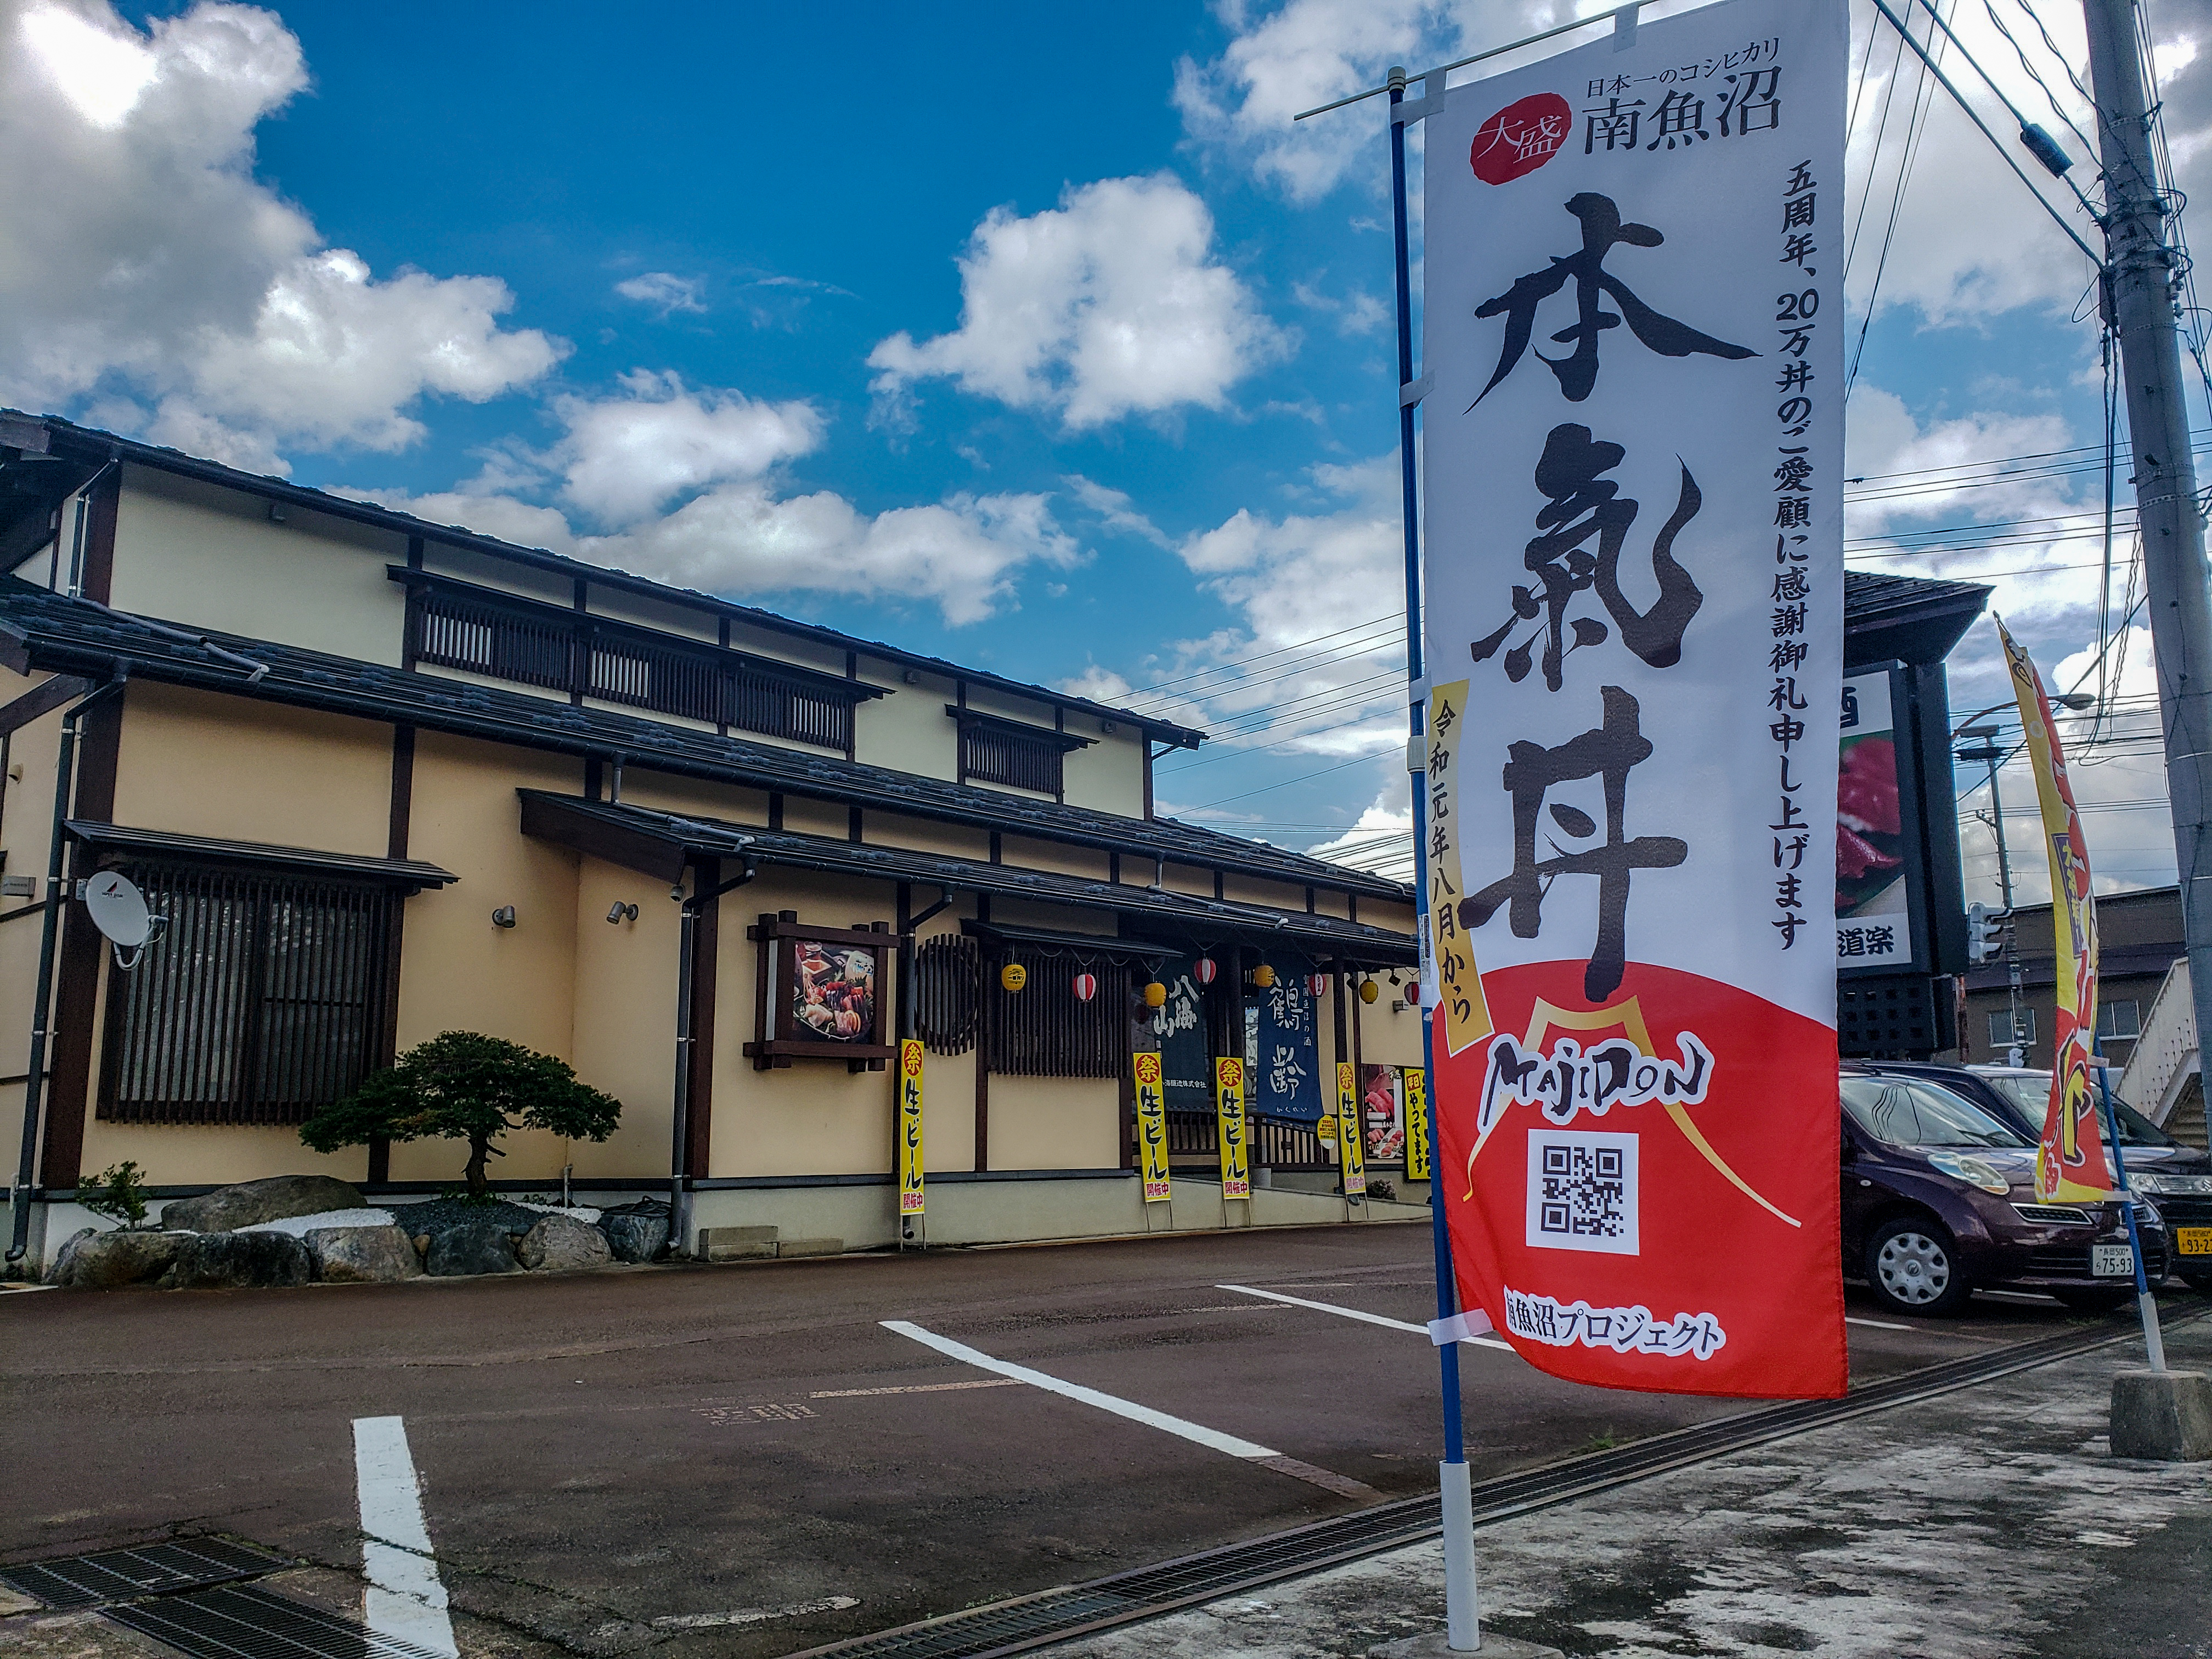 The Majidon flag on display in front of Sushi Duraku in Muikamachi.